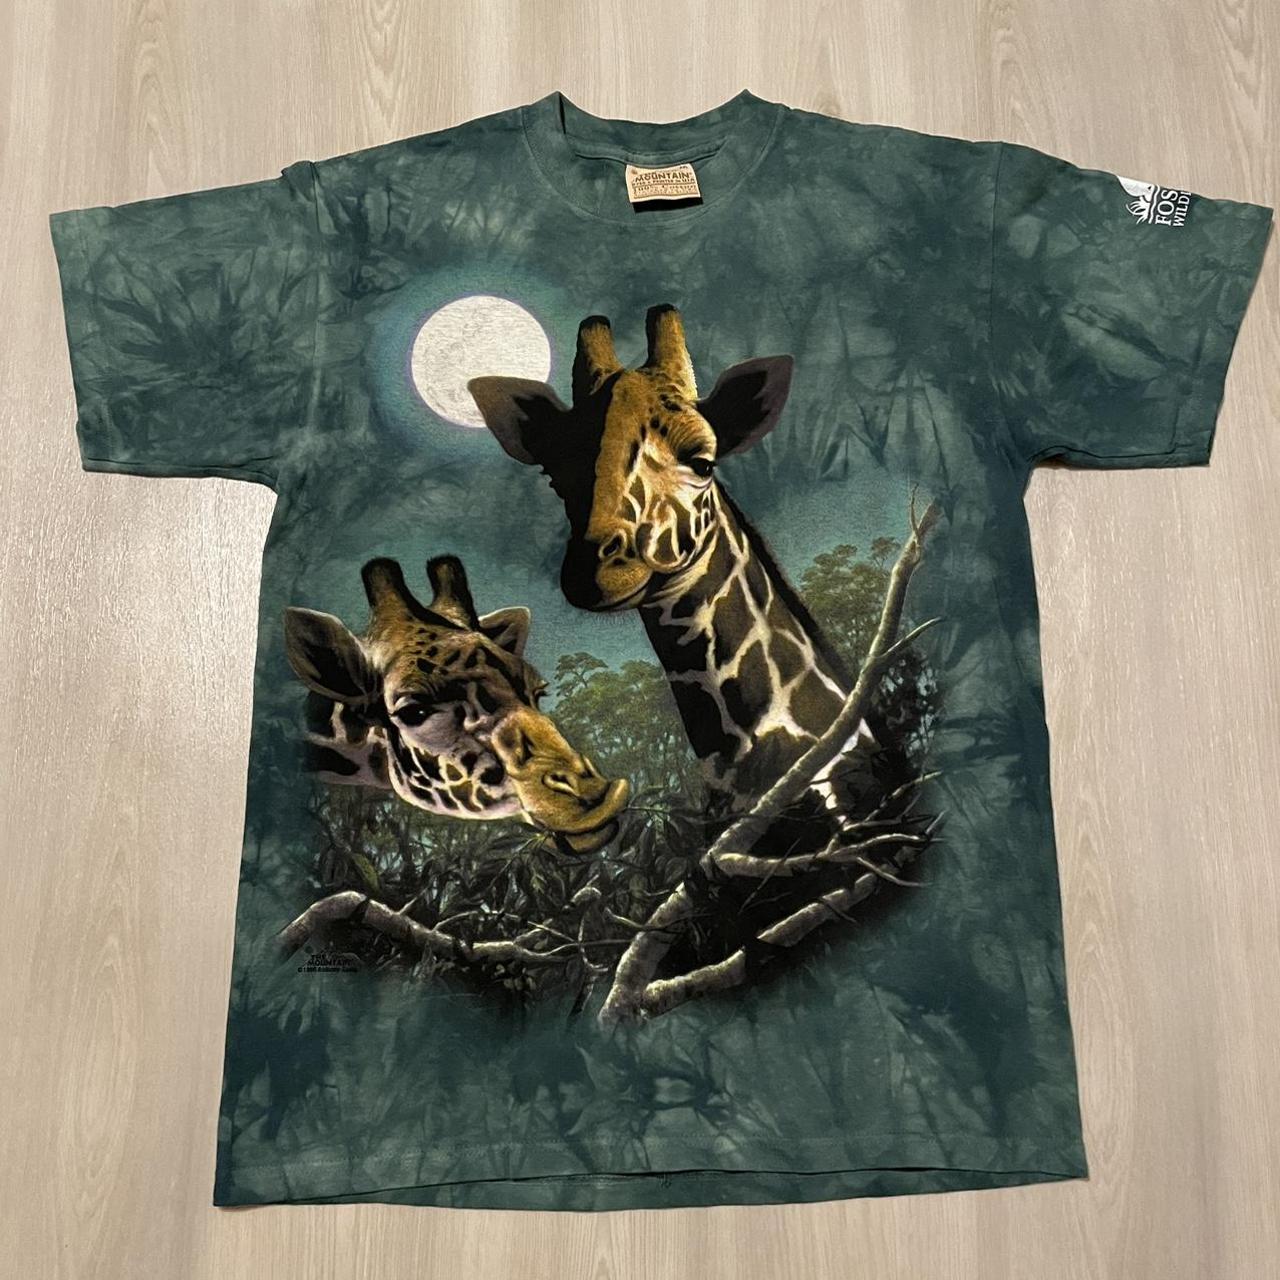 Giraffe Shirt Animal Graphic Tshirt for Women Casual Short Sleeve